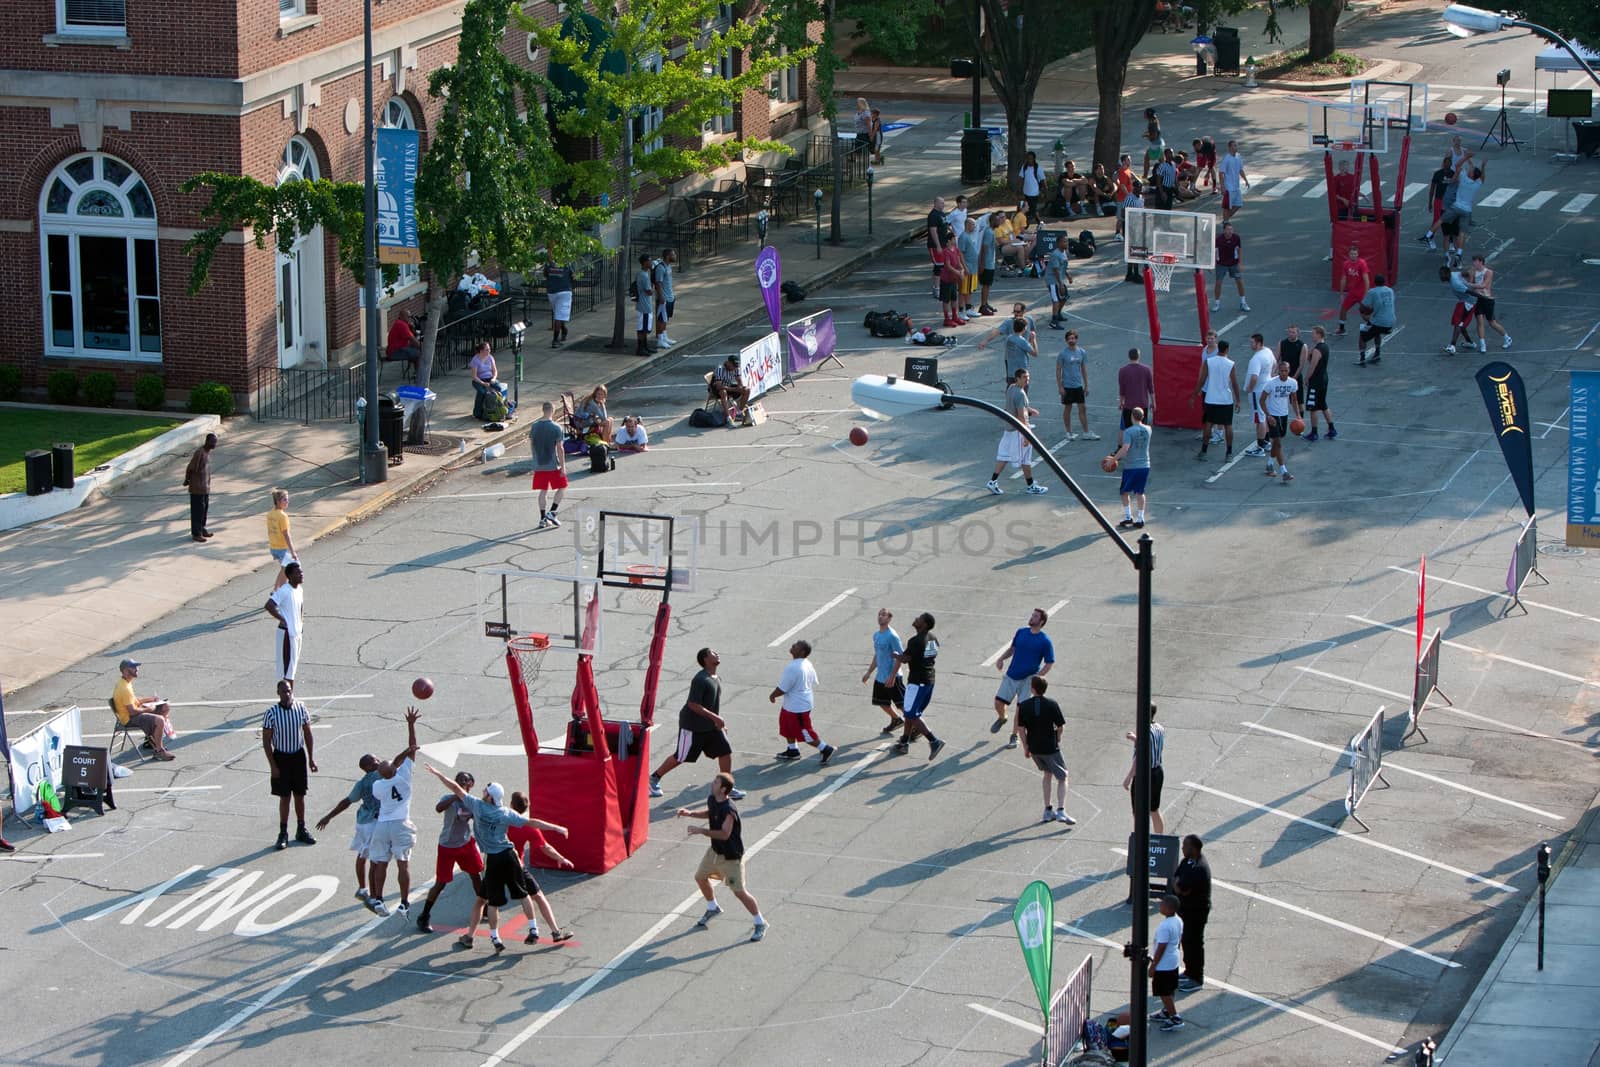 Men Play In Basketball Tournament On City Street by BluIz60